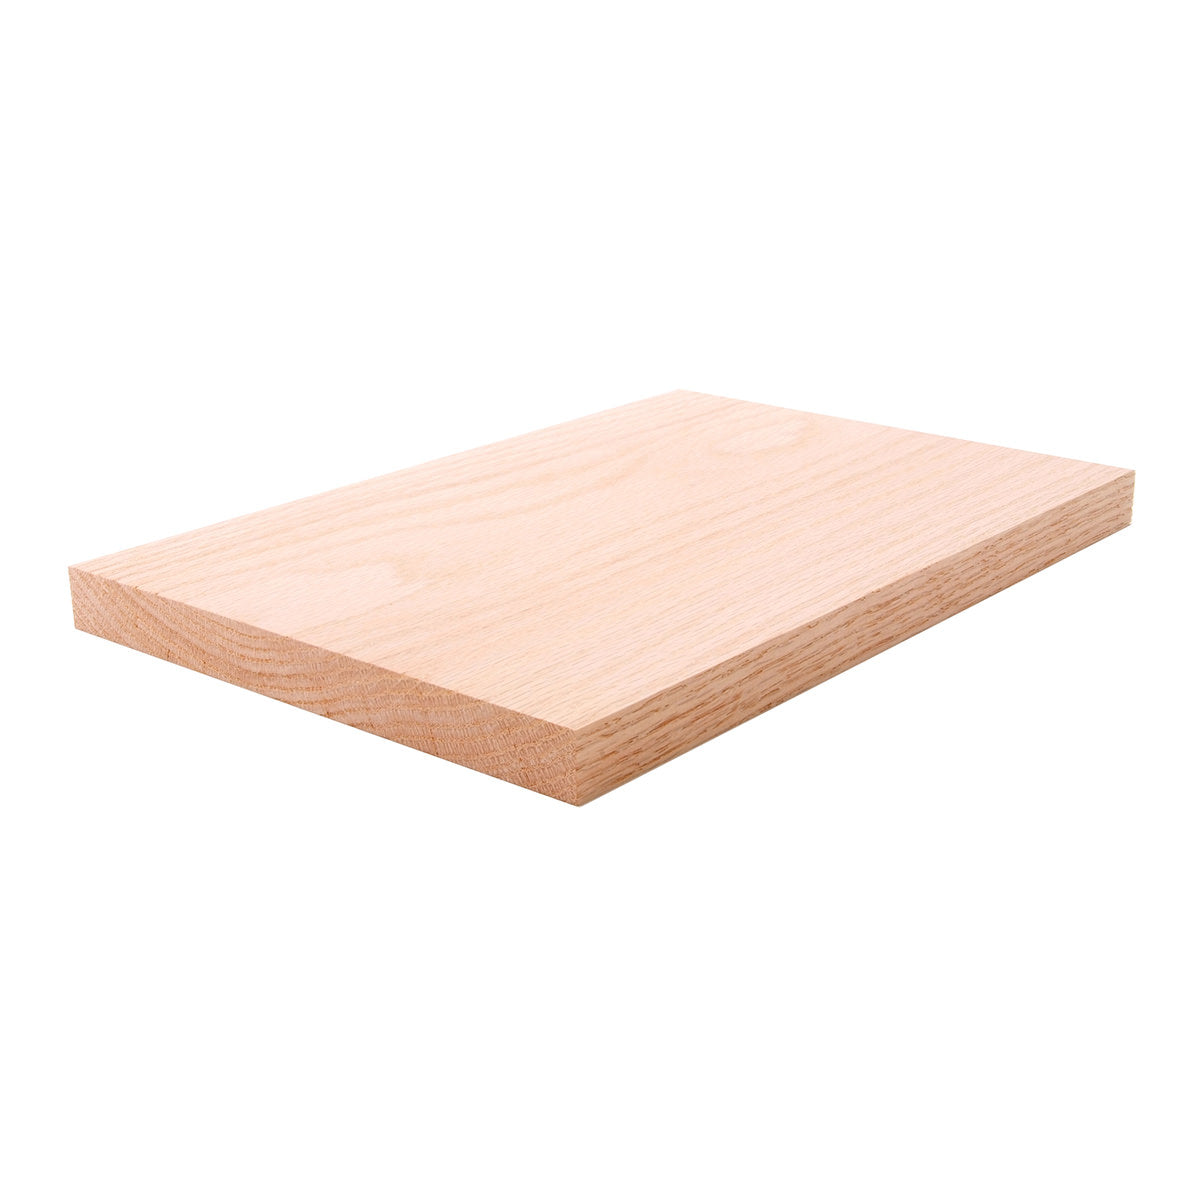 1” X 8” Red Oak, Dressed Four Side Select Grade boards.